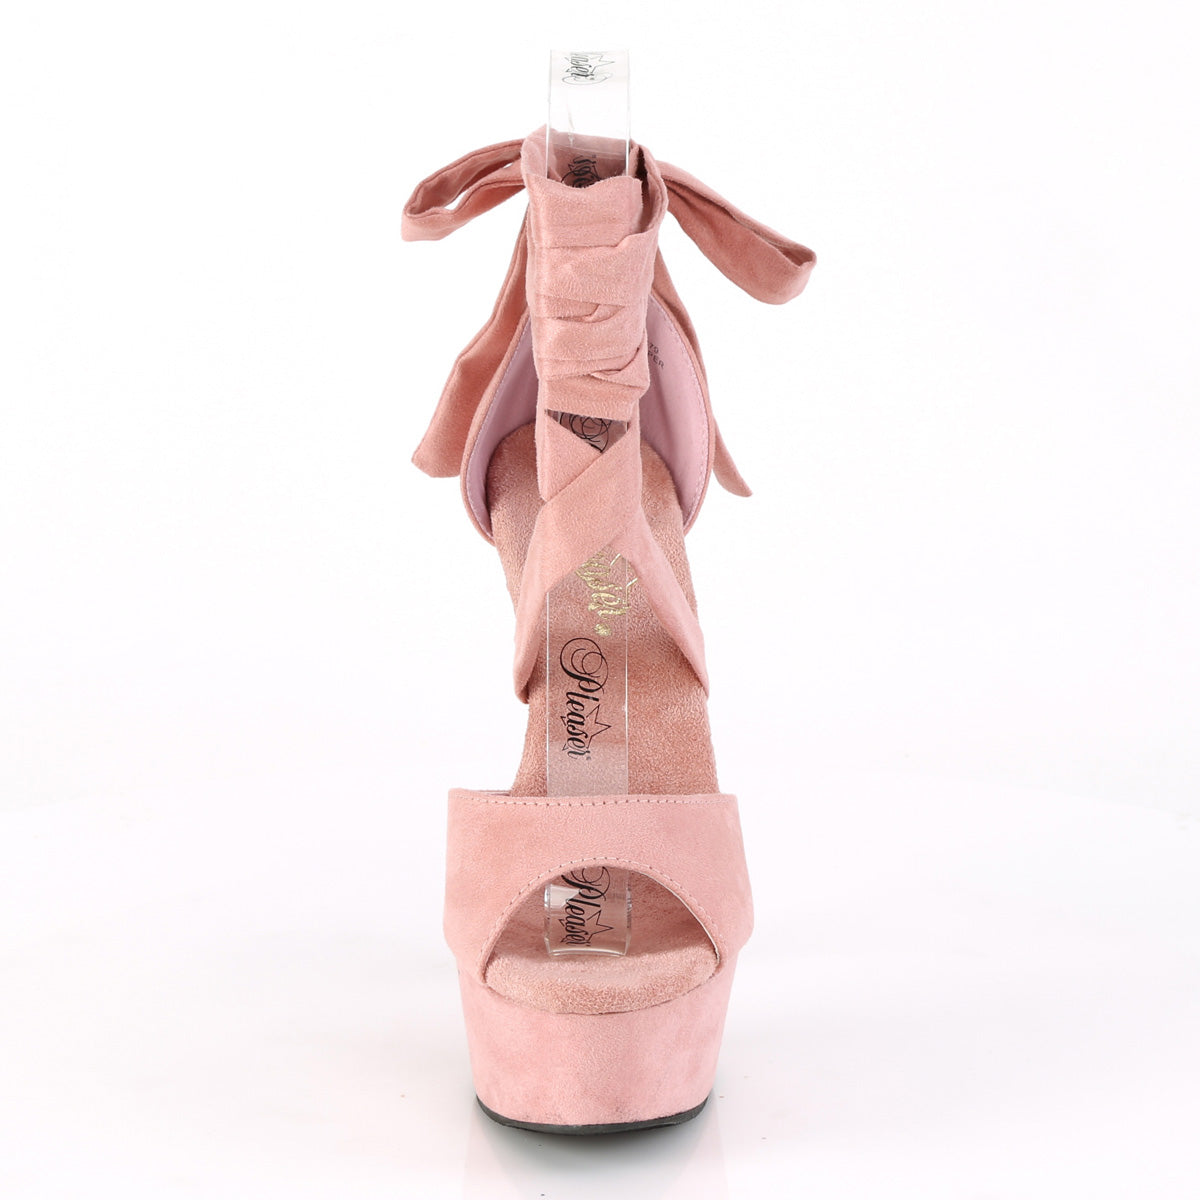 DELIGHT-679 Pleaser 6" Heel Baby Pink Pole Dancing Platforms-Pleaser- Sexy Shoes Alternative Footwear